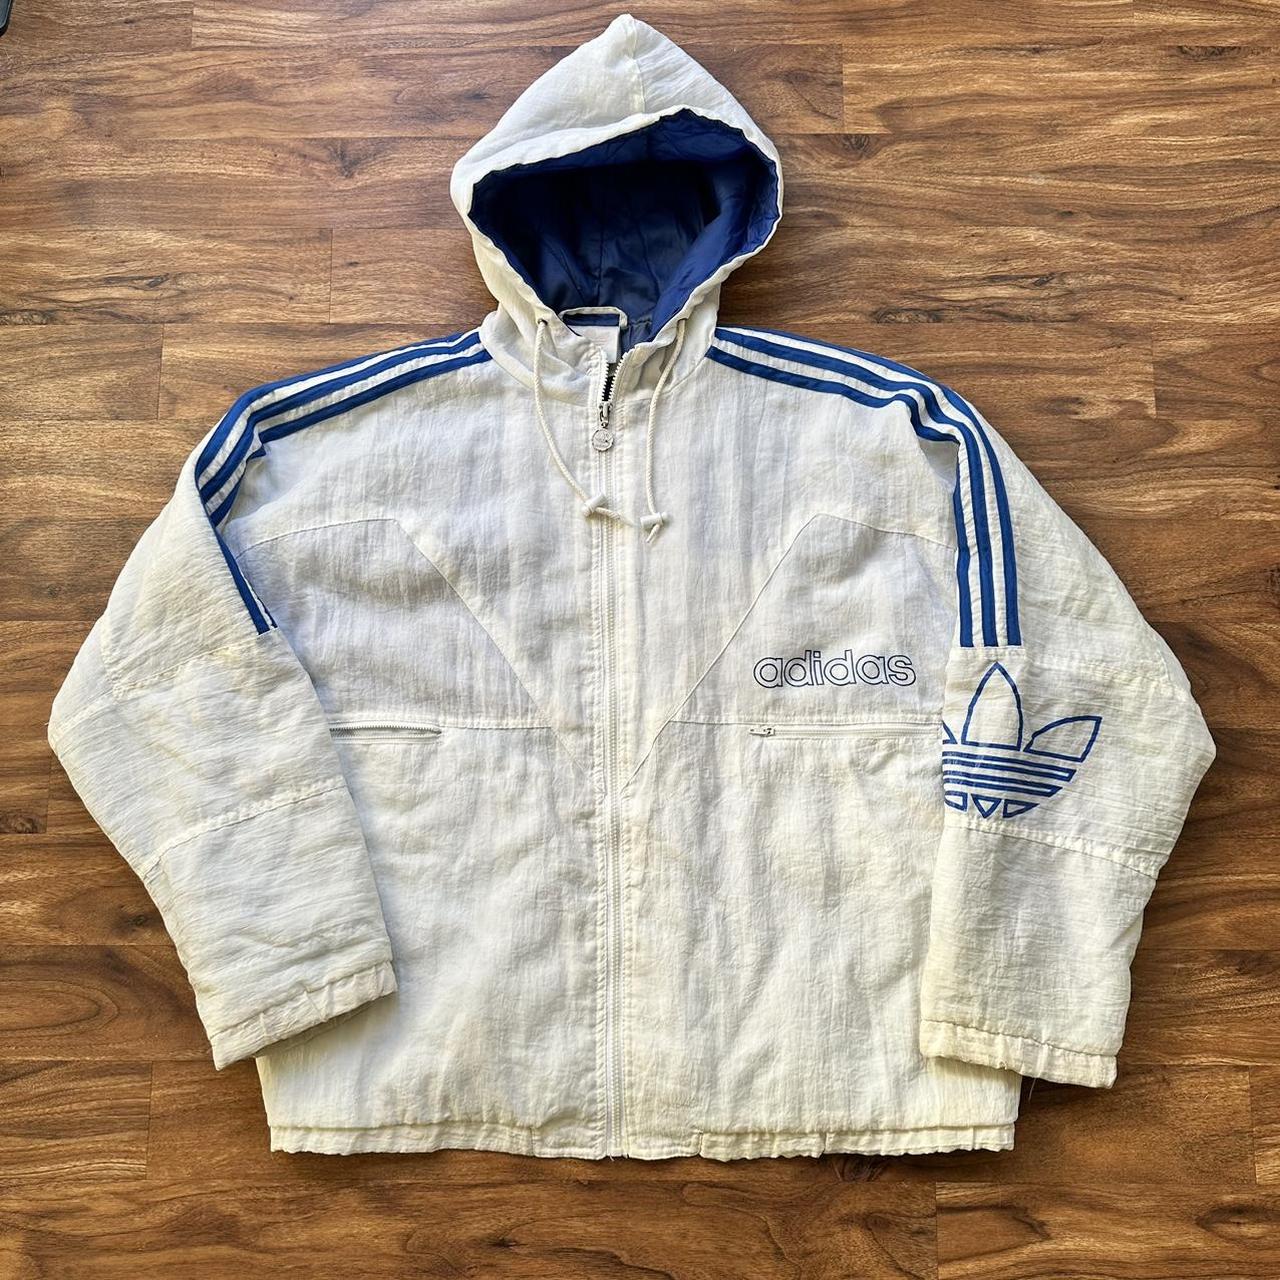 1990s puffed sleeves hooded jacket